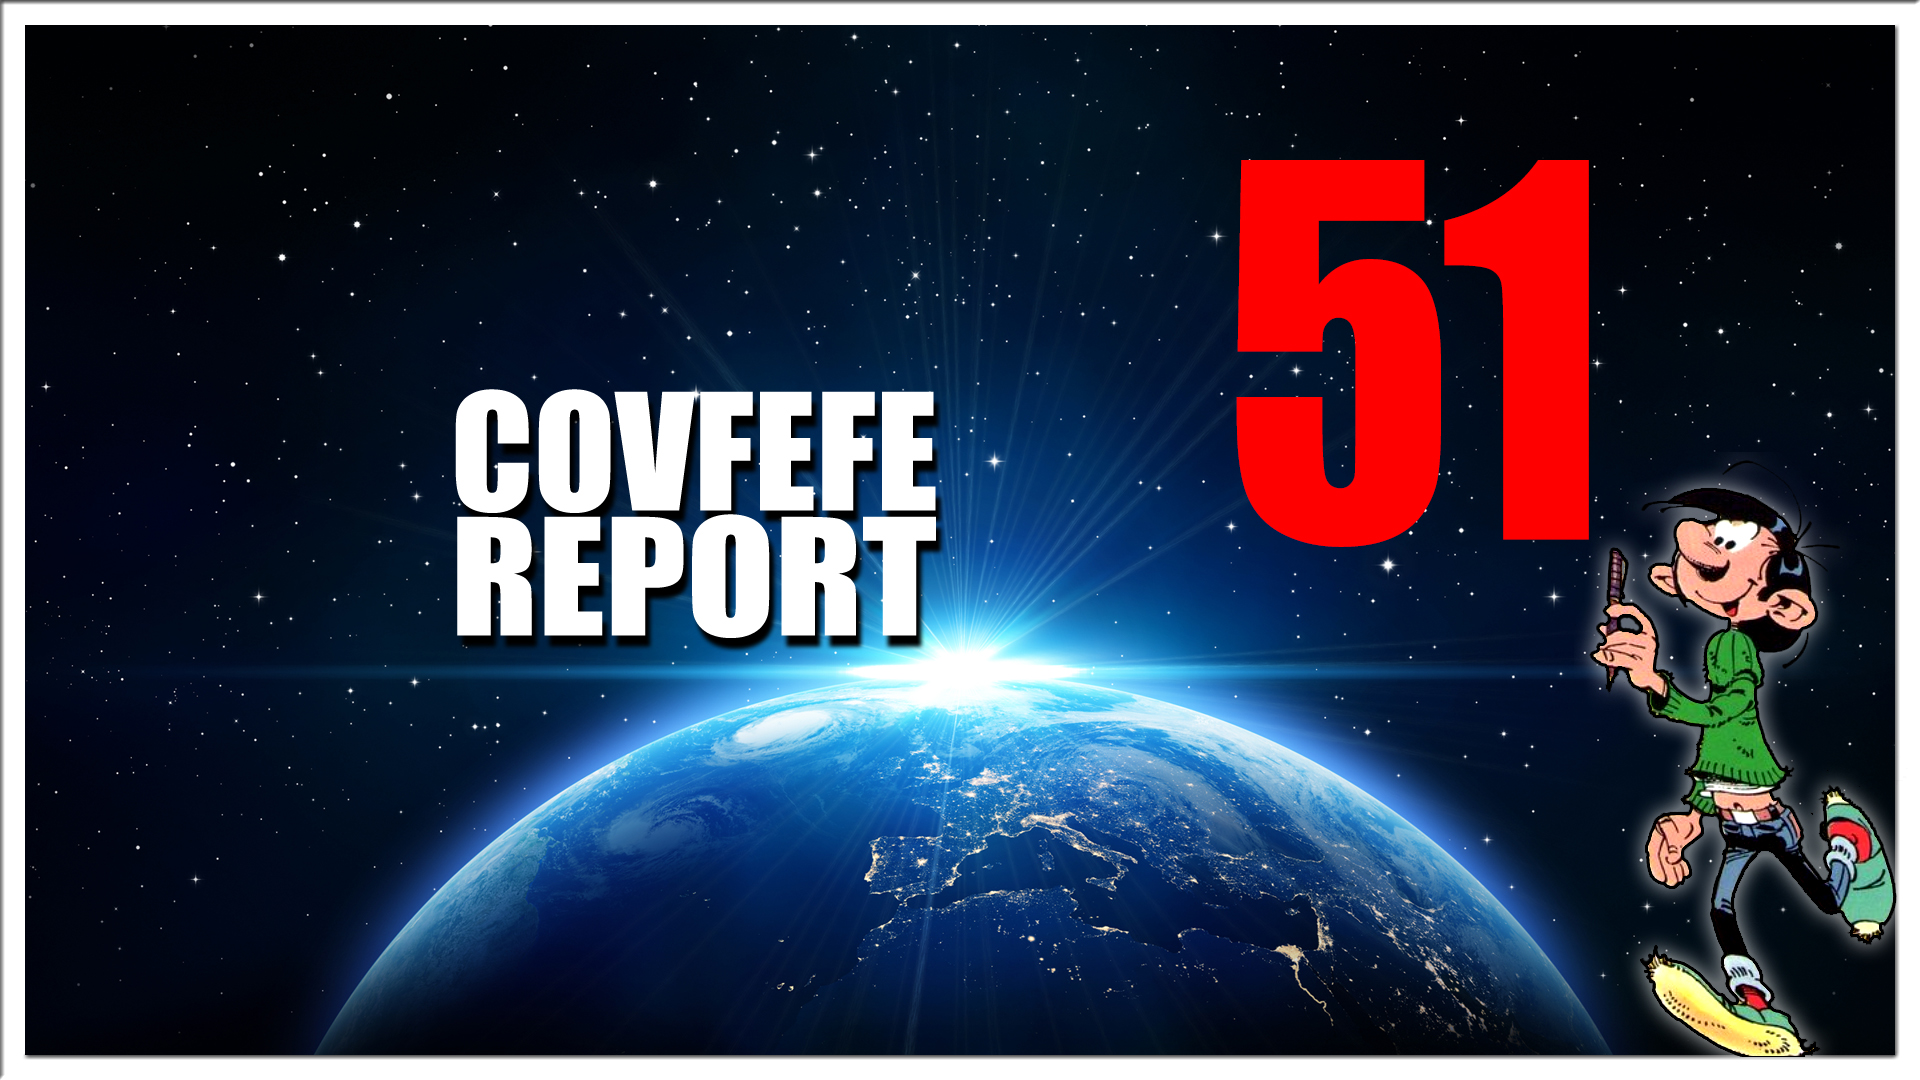 Covfefe Report 51. Spygate, Adam Shiff - Mossad, Sanna Marin